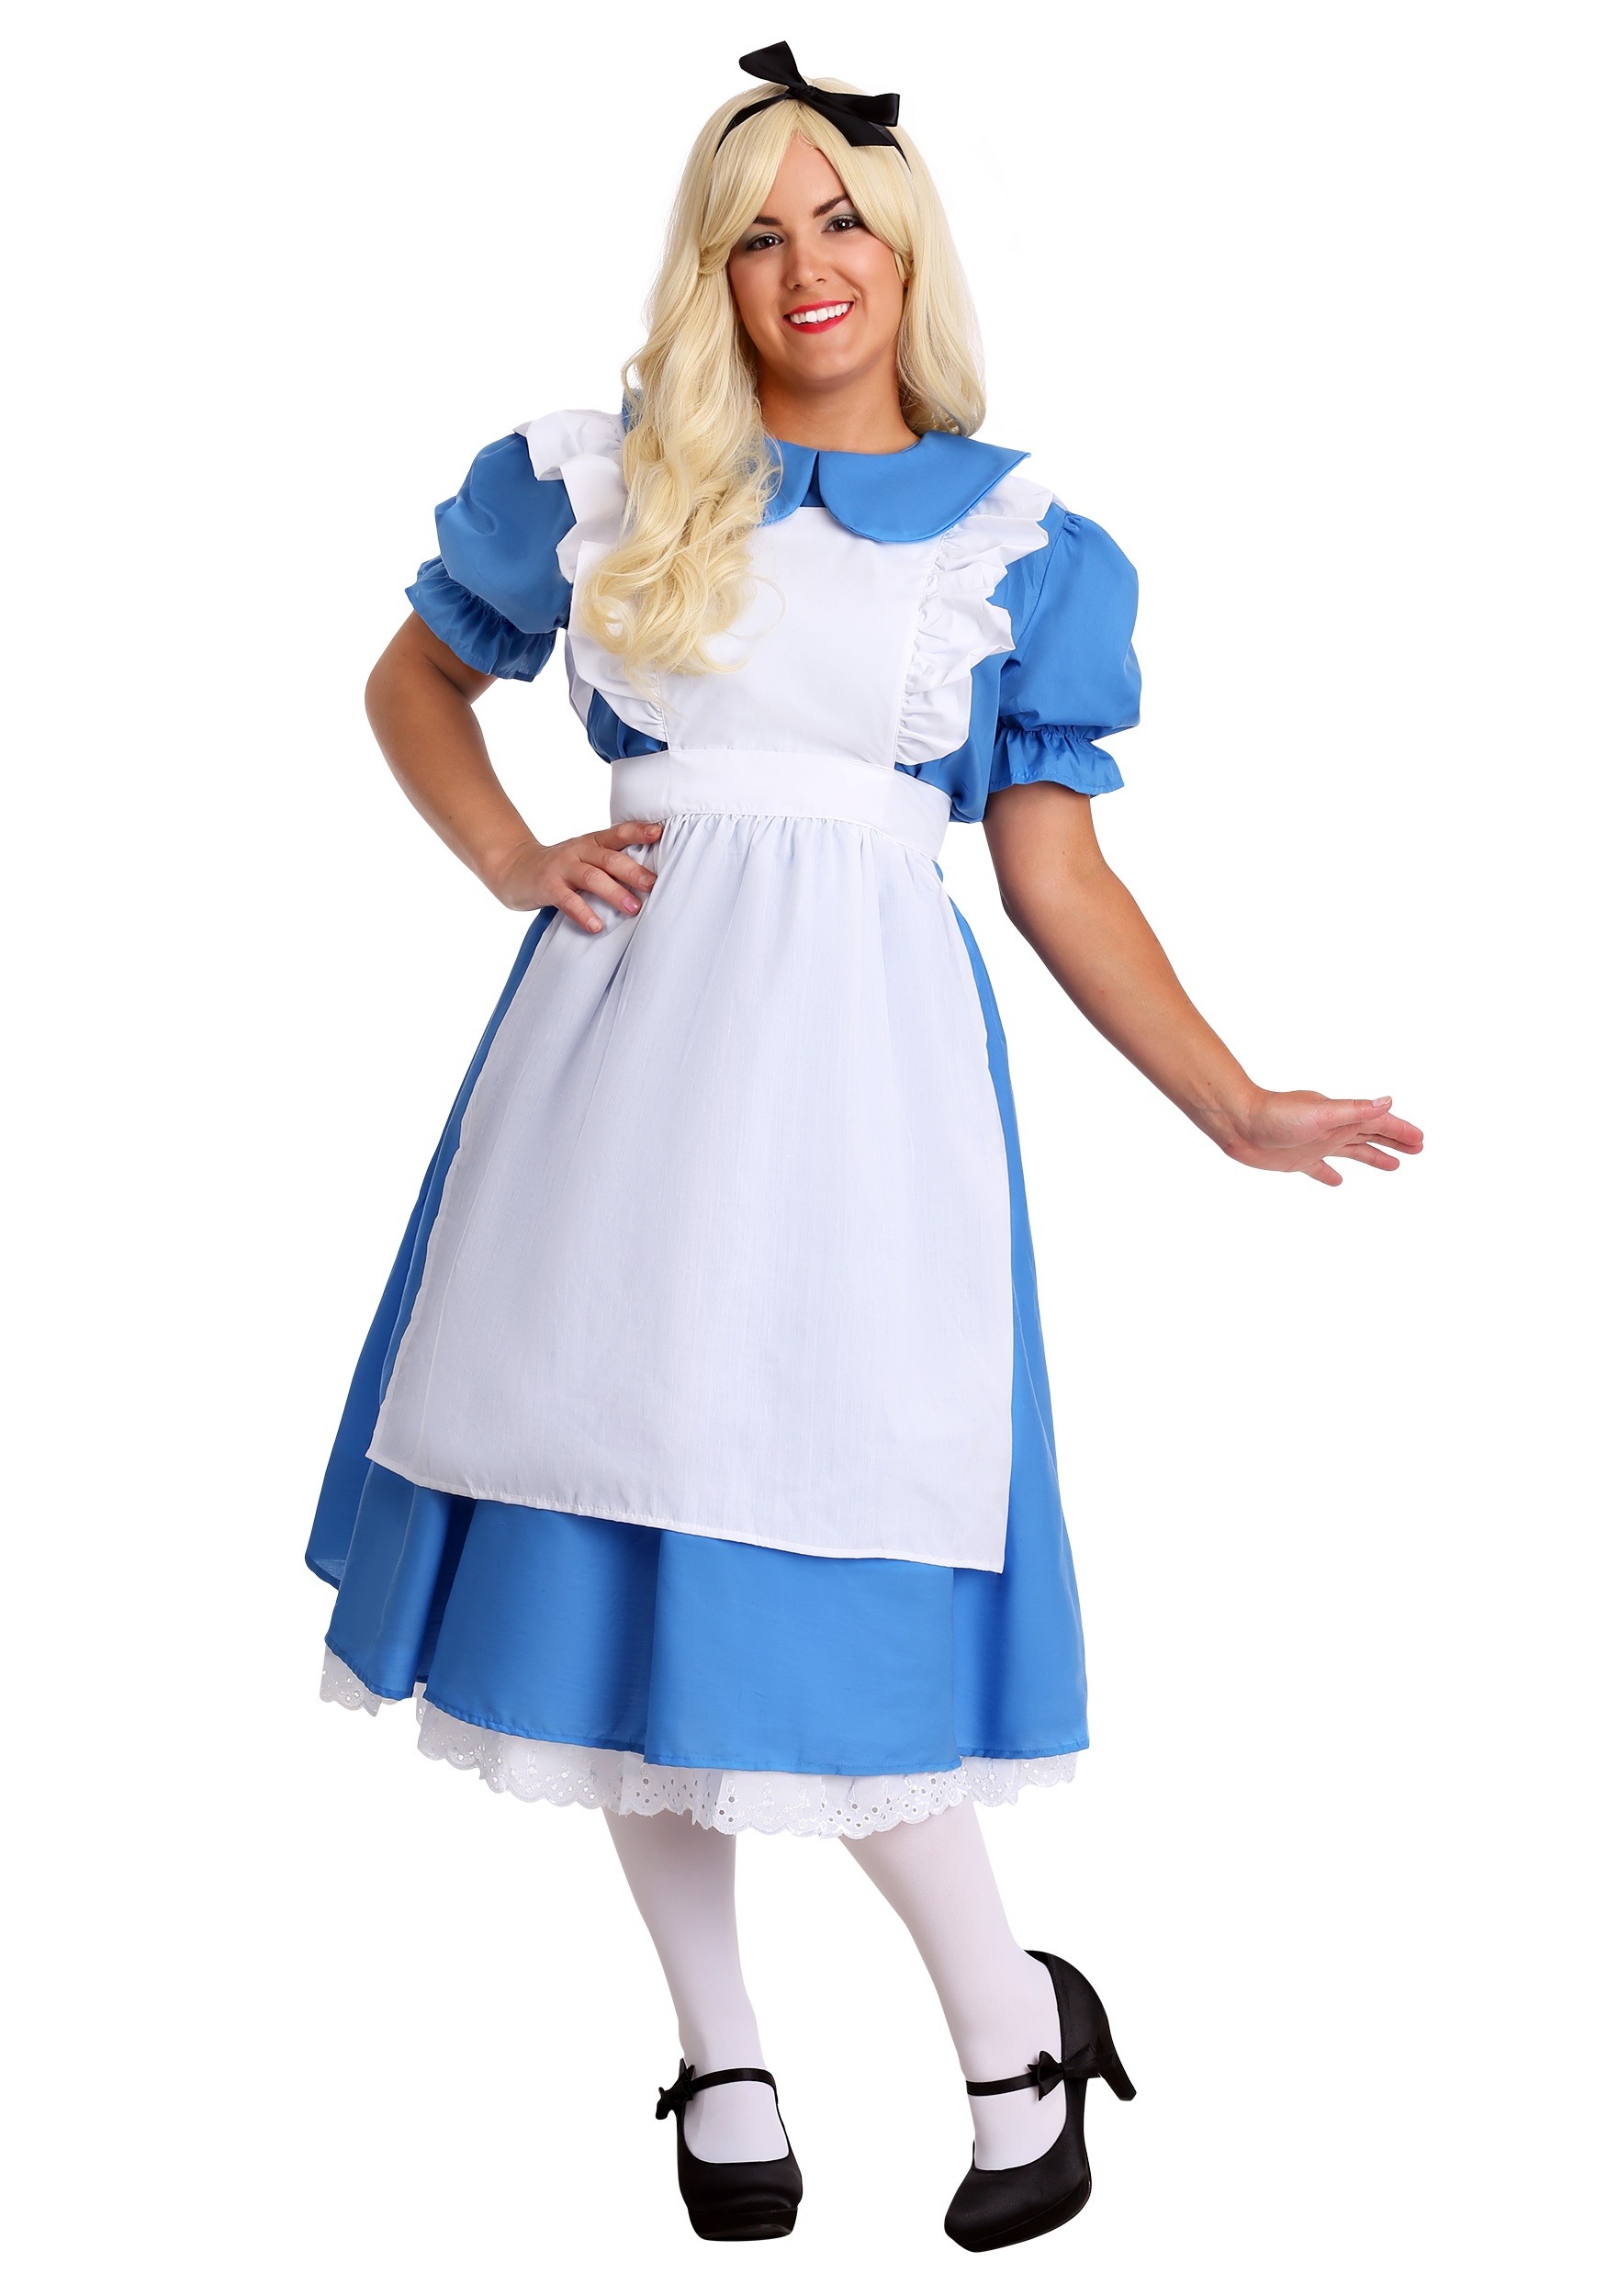 Image of FUN Costumes Deluxe Plus Size Alice Costume for Women | Exclusive Alice Costume